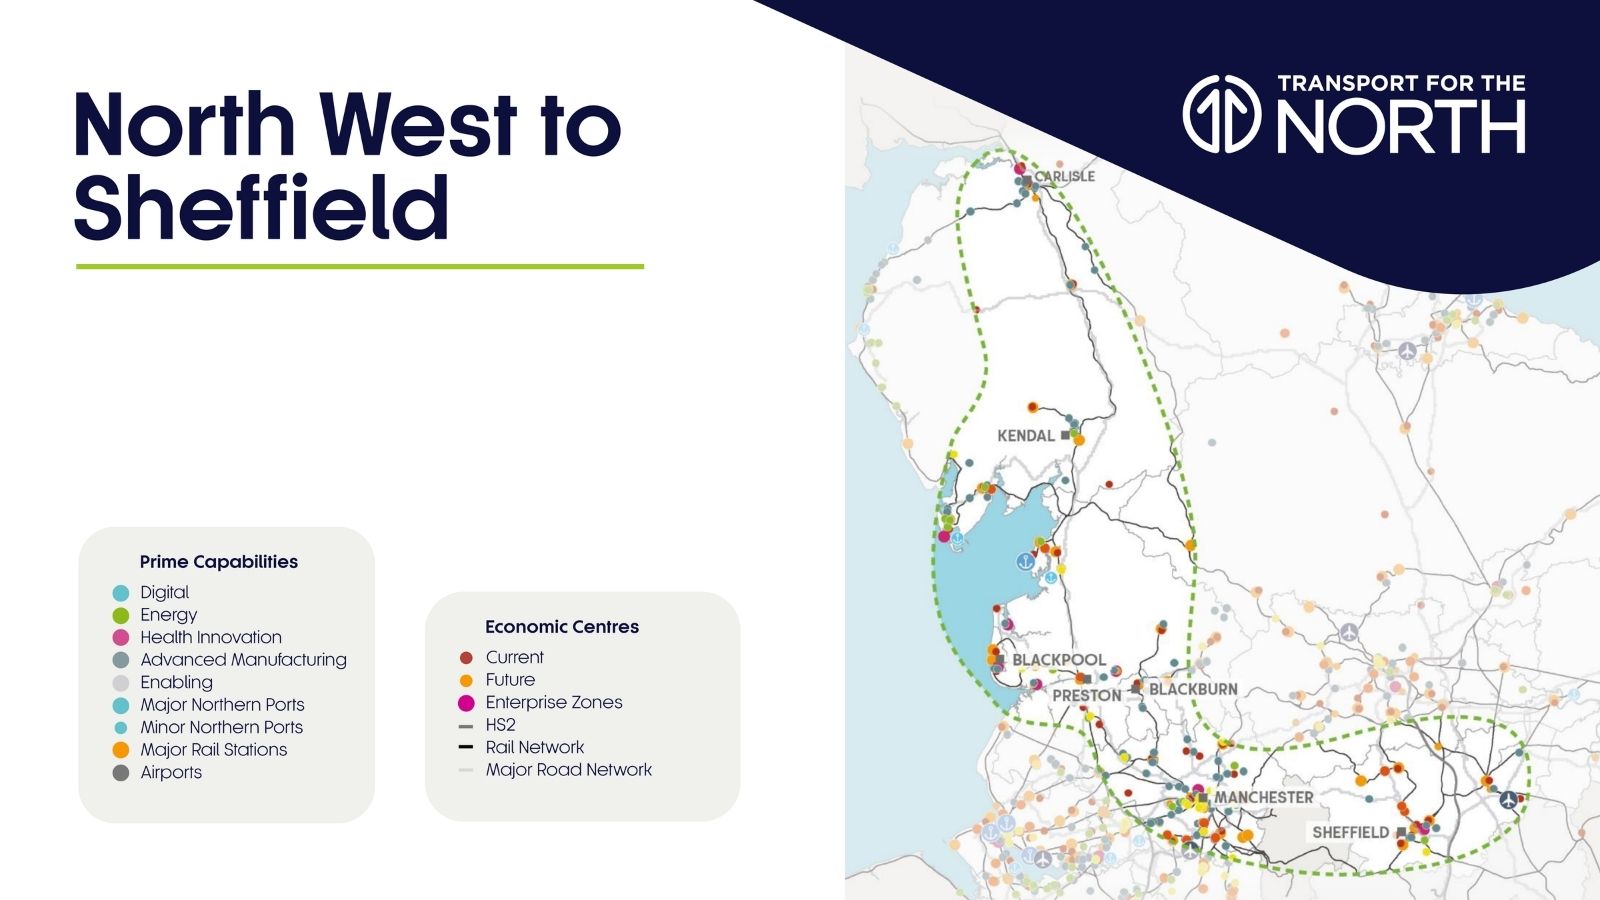 North West to Sheffield Strategic Development Corridor